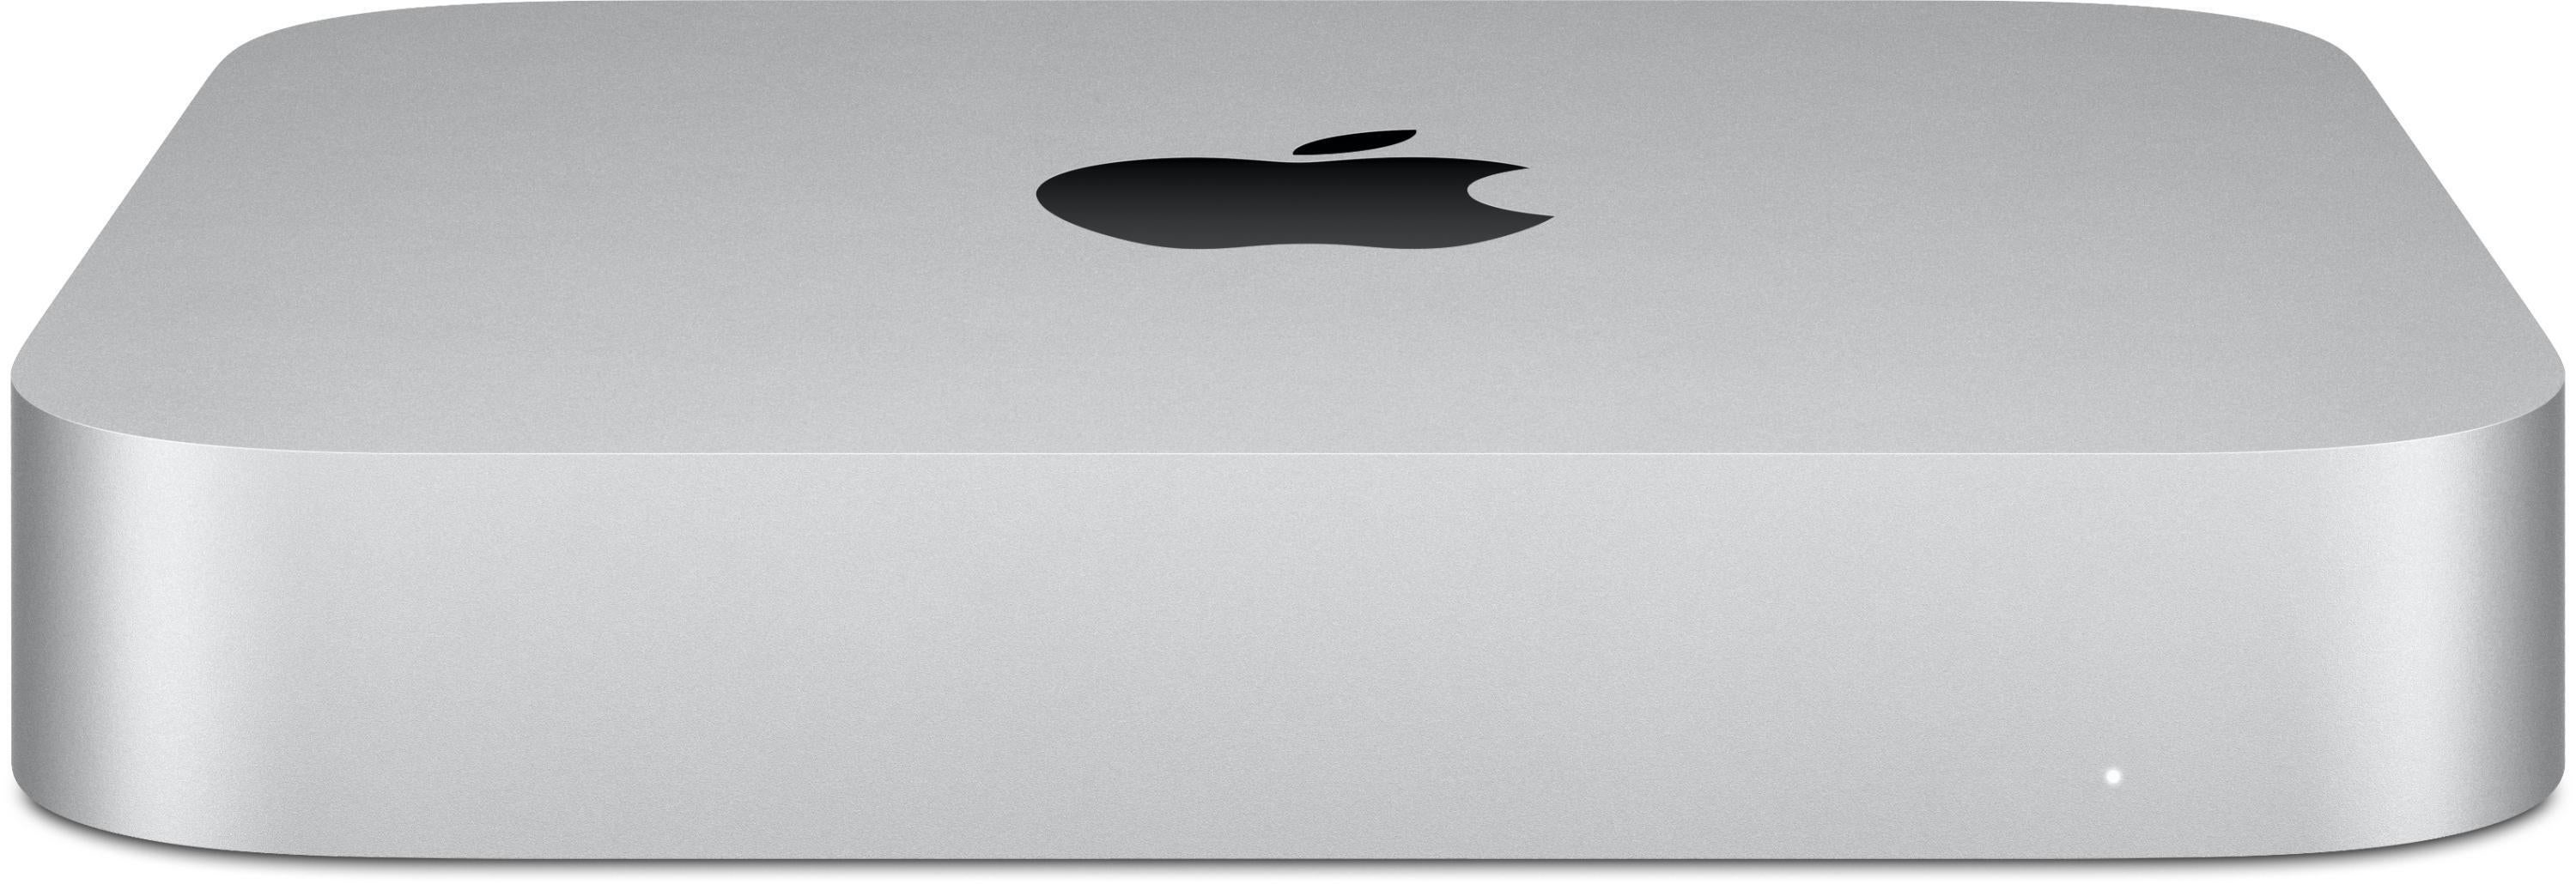 Apple Mac mini Apple M1 chip with 8‑core CPU and 8‑core GPU, 512GB SSD